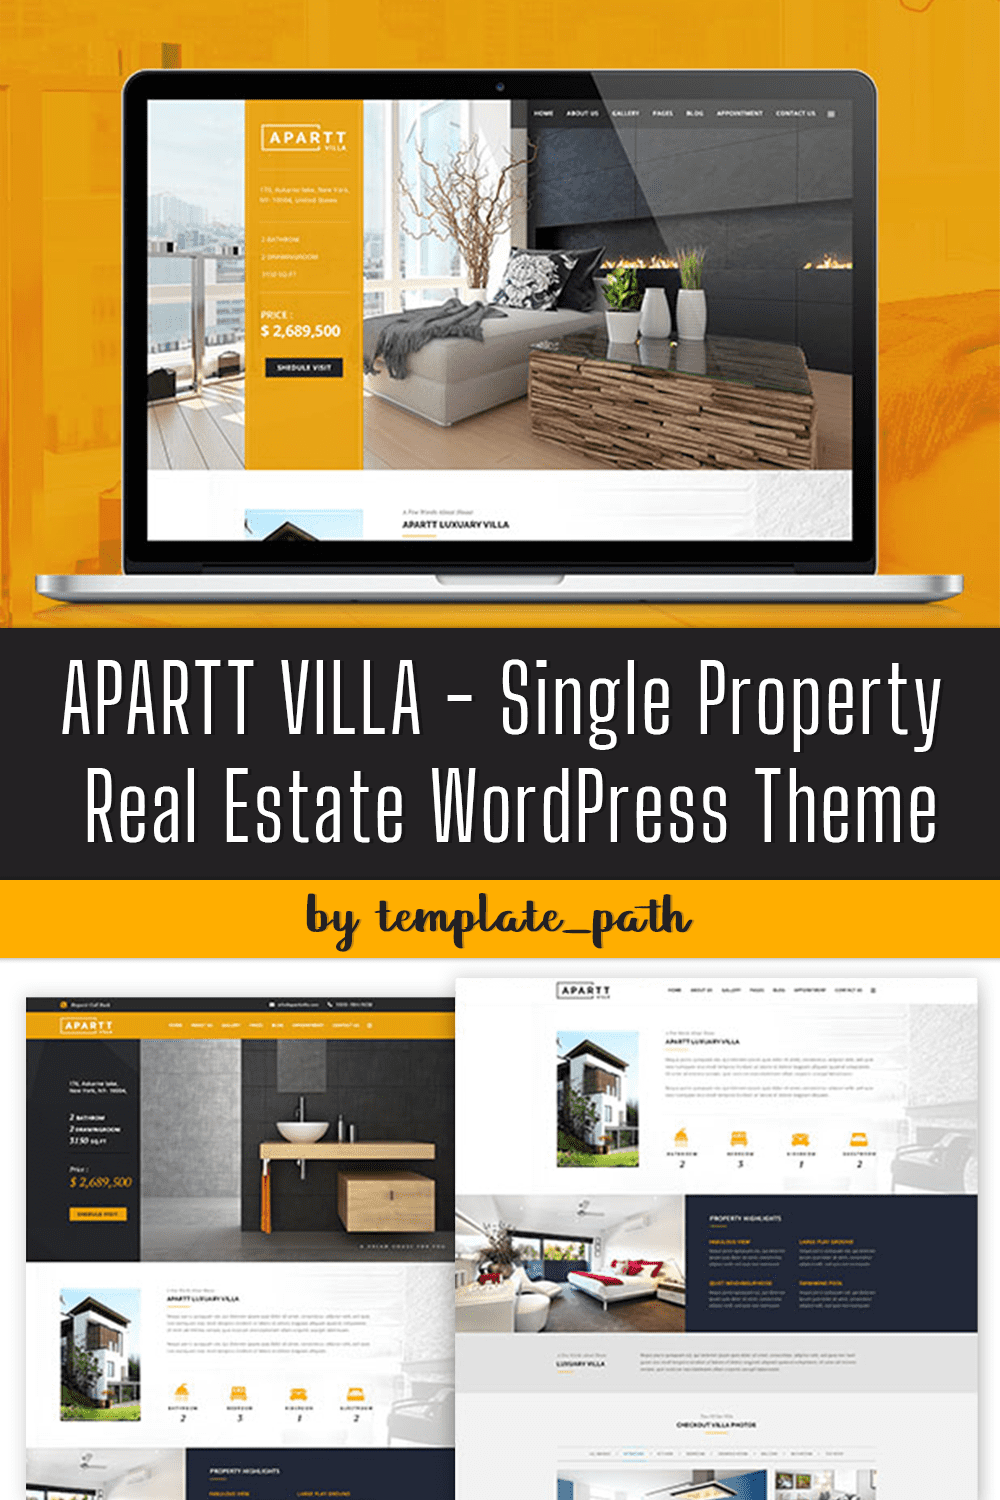 Apartt Villa - Single Property Real Estate Wordpress Theme - Pinterest.